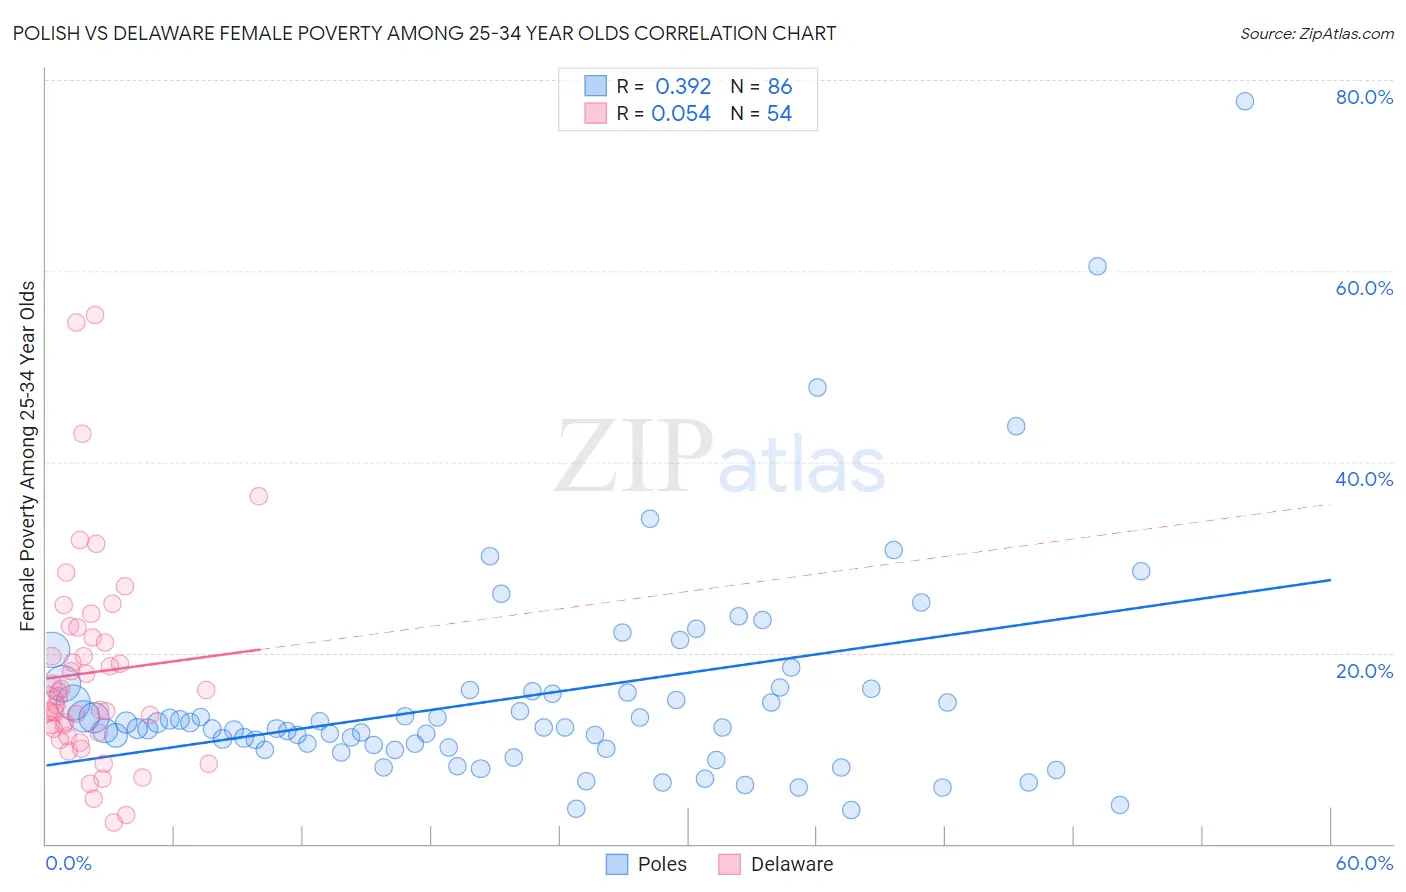 Polish vs Delaware Female Poverty Among 25-34 Year Olds